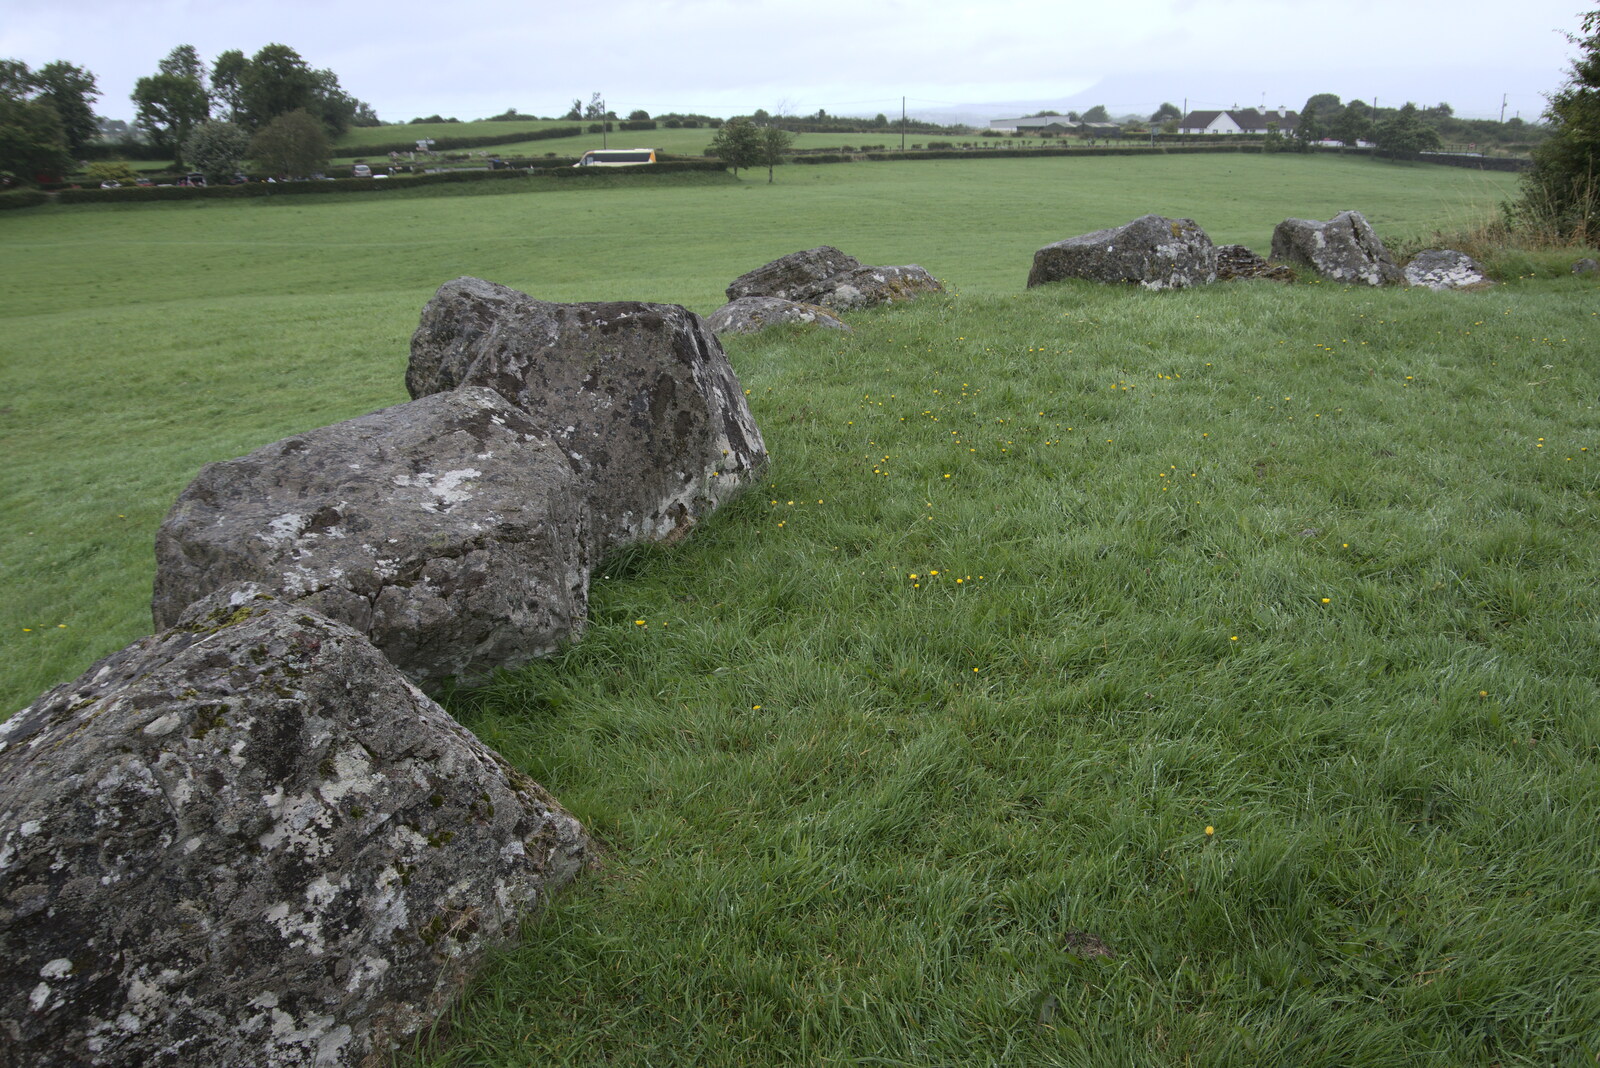 A stone circle from Walks Around Benbulben and Carrowmore, County Sligo, Ireland - 13th August 2021